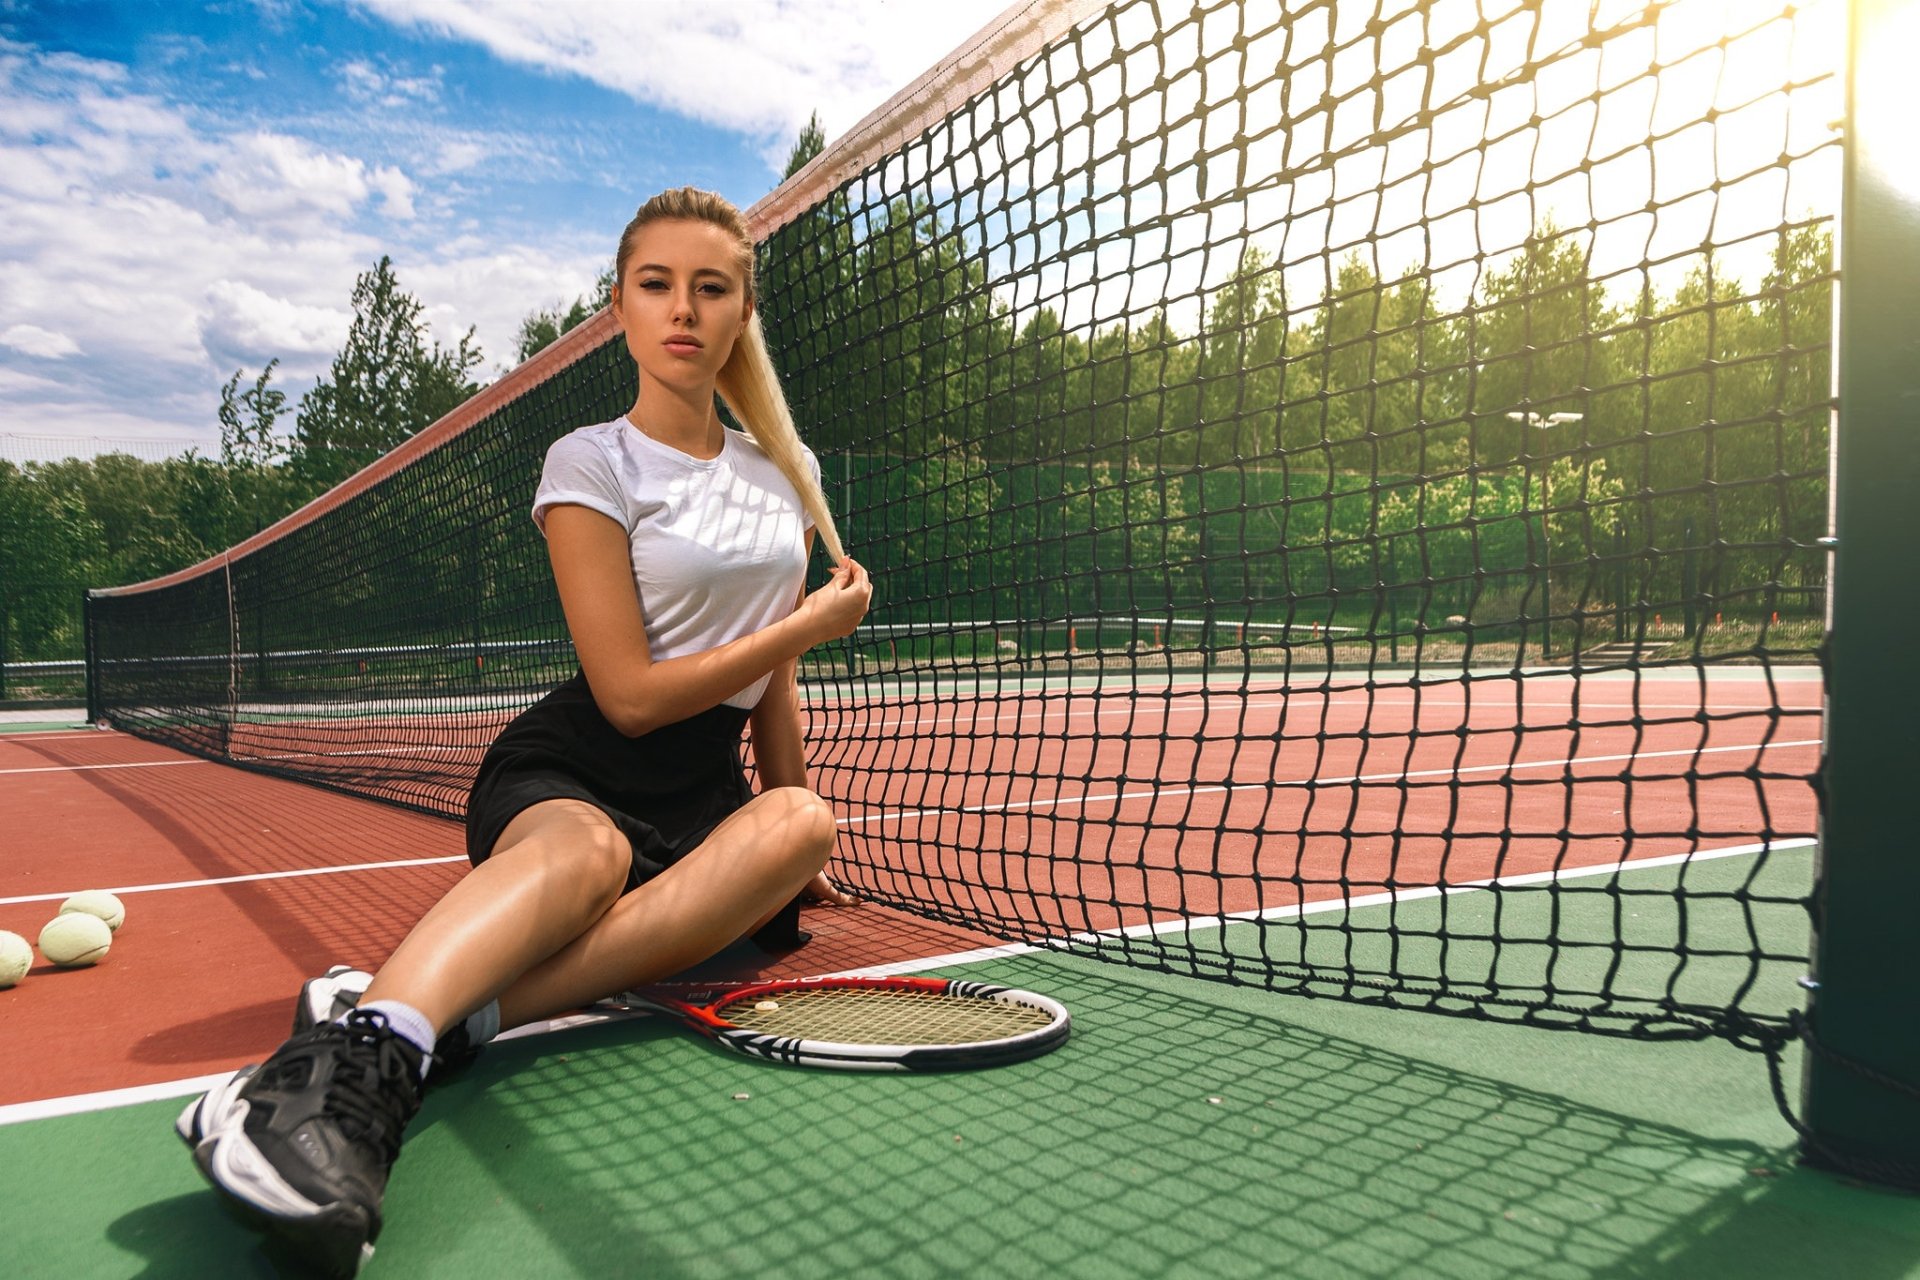 Download Racket Blonde Tennis Sports Hd Wallpaper By Dmitry Medved 